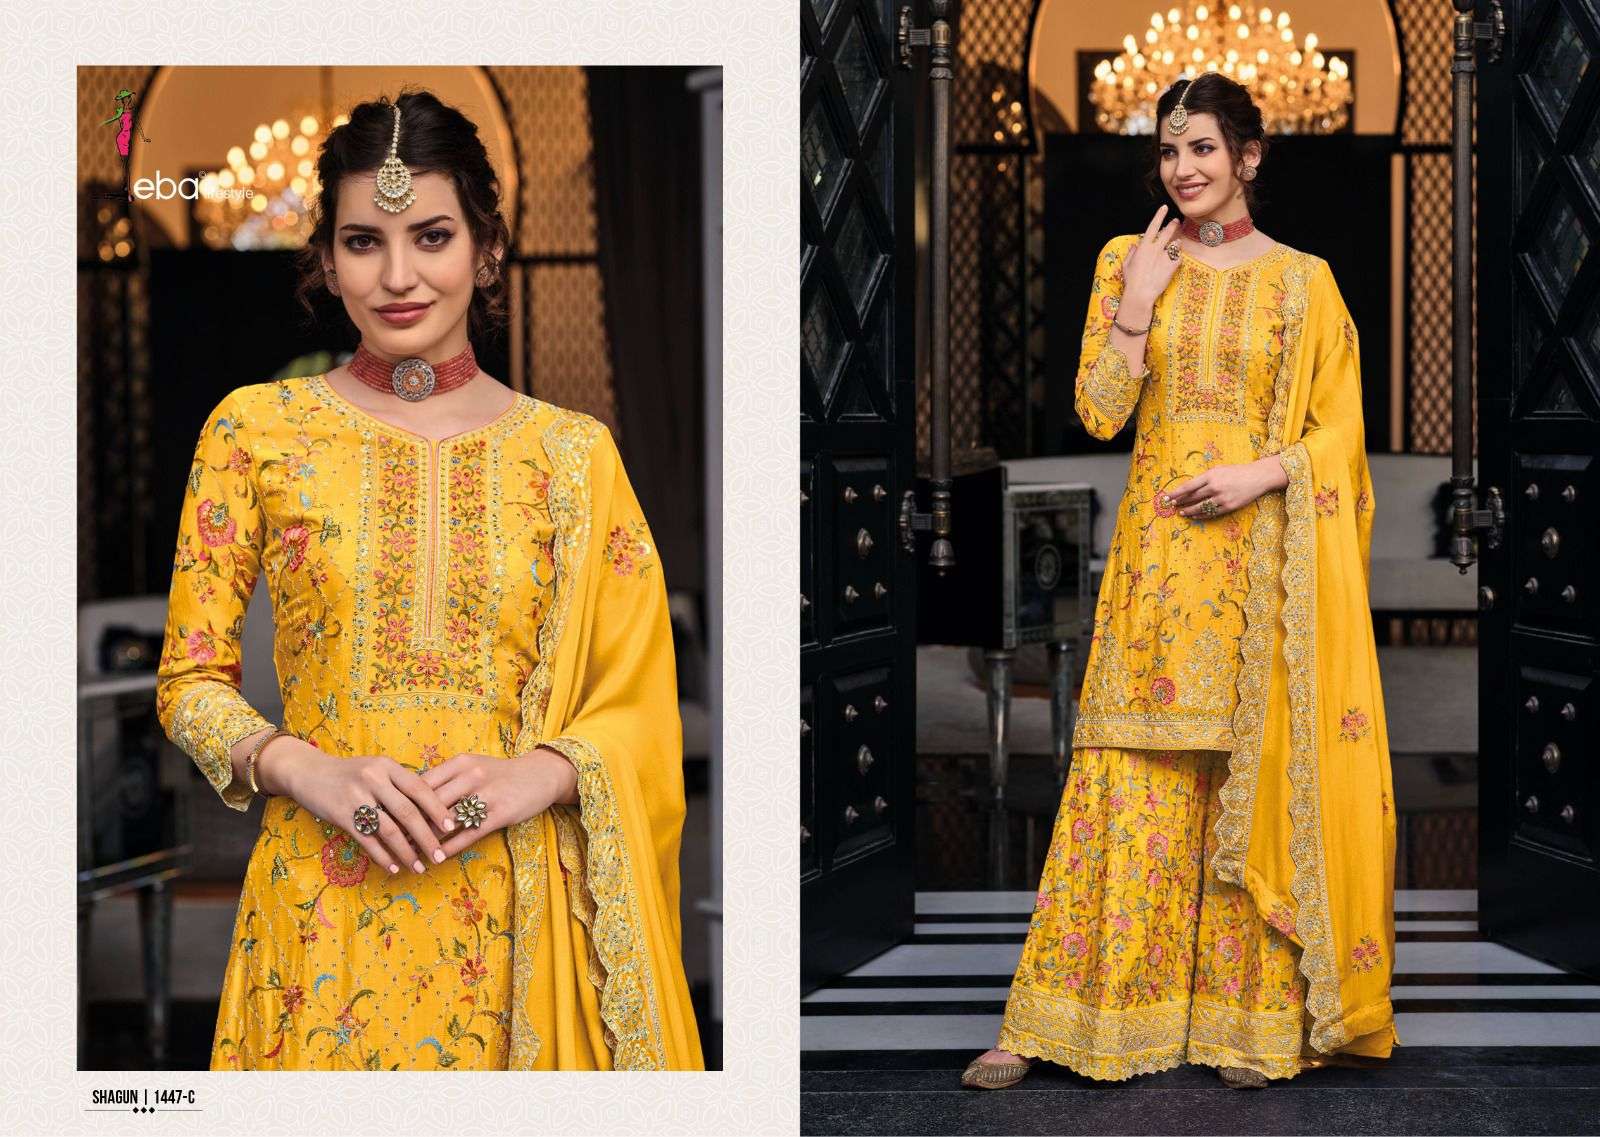 eba lifestyle shagun color edition vol-5 1447 series function special designer salwar kameez catalogue surat 